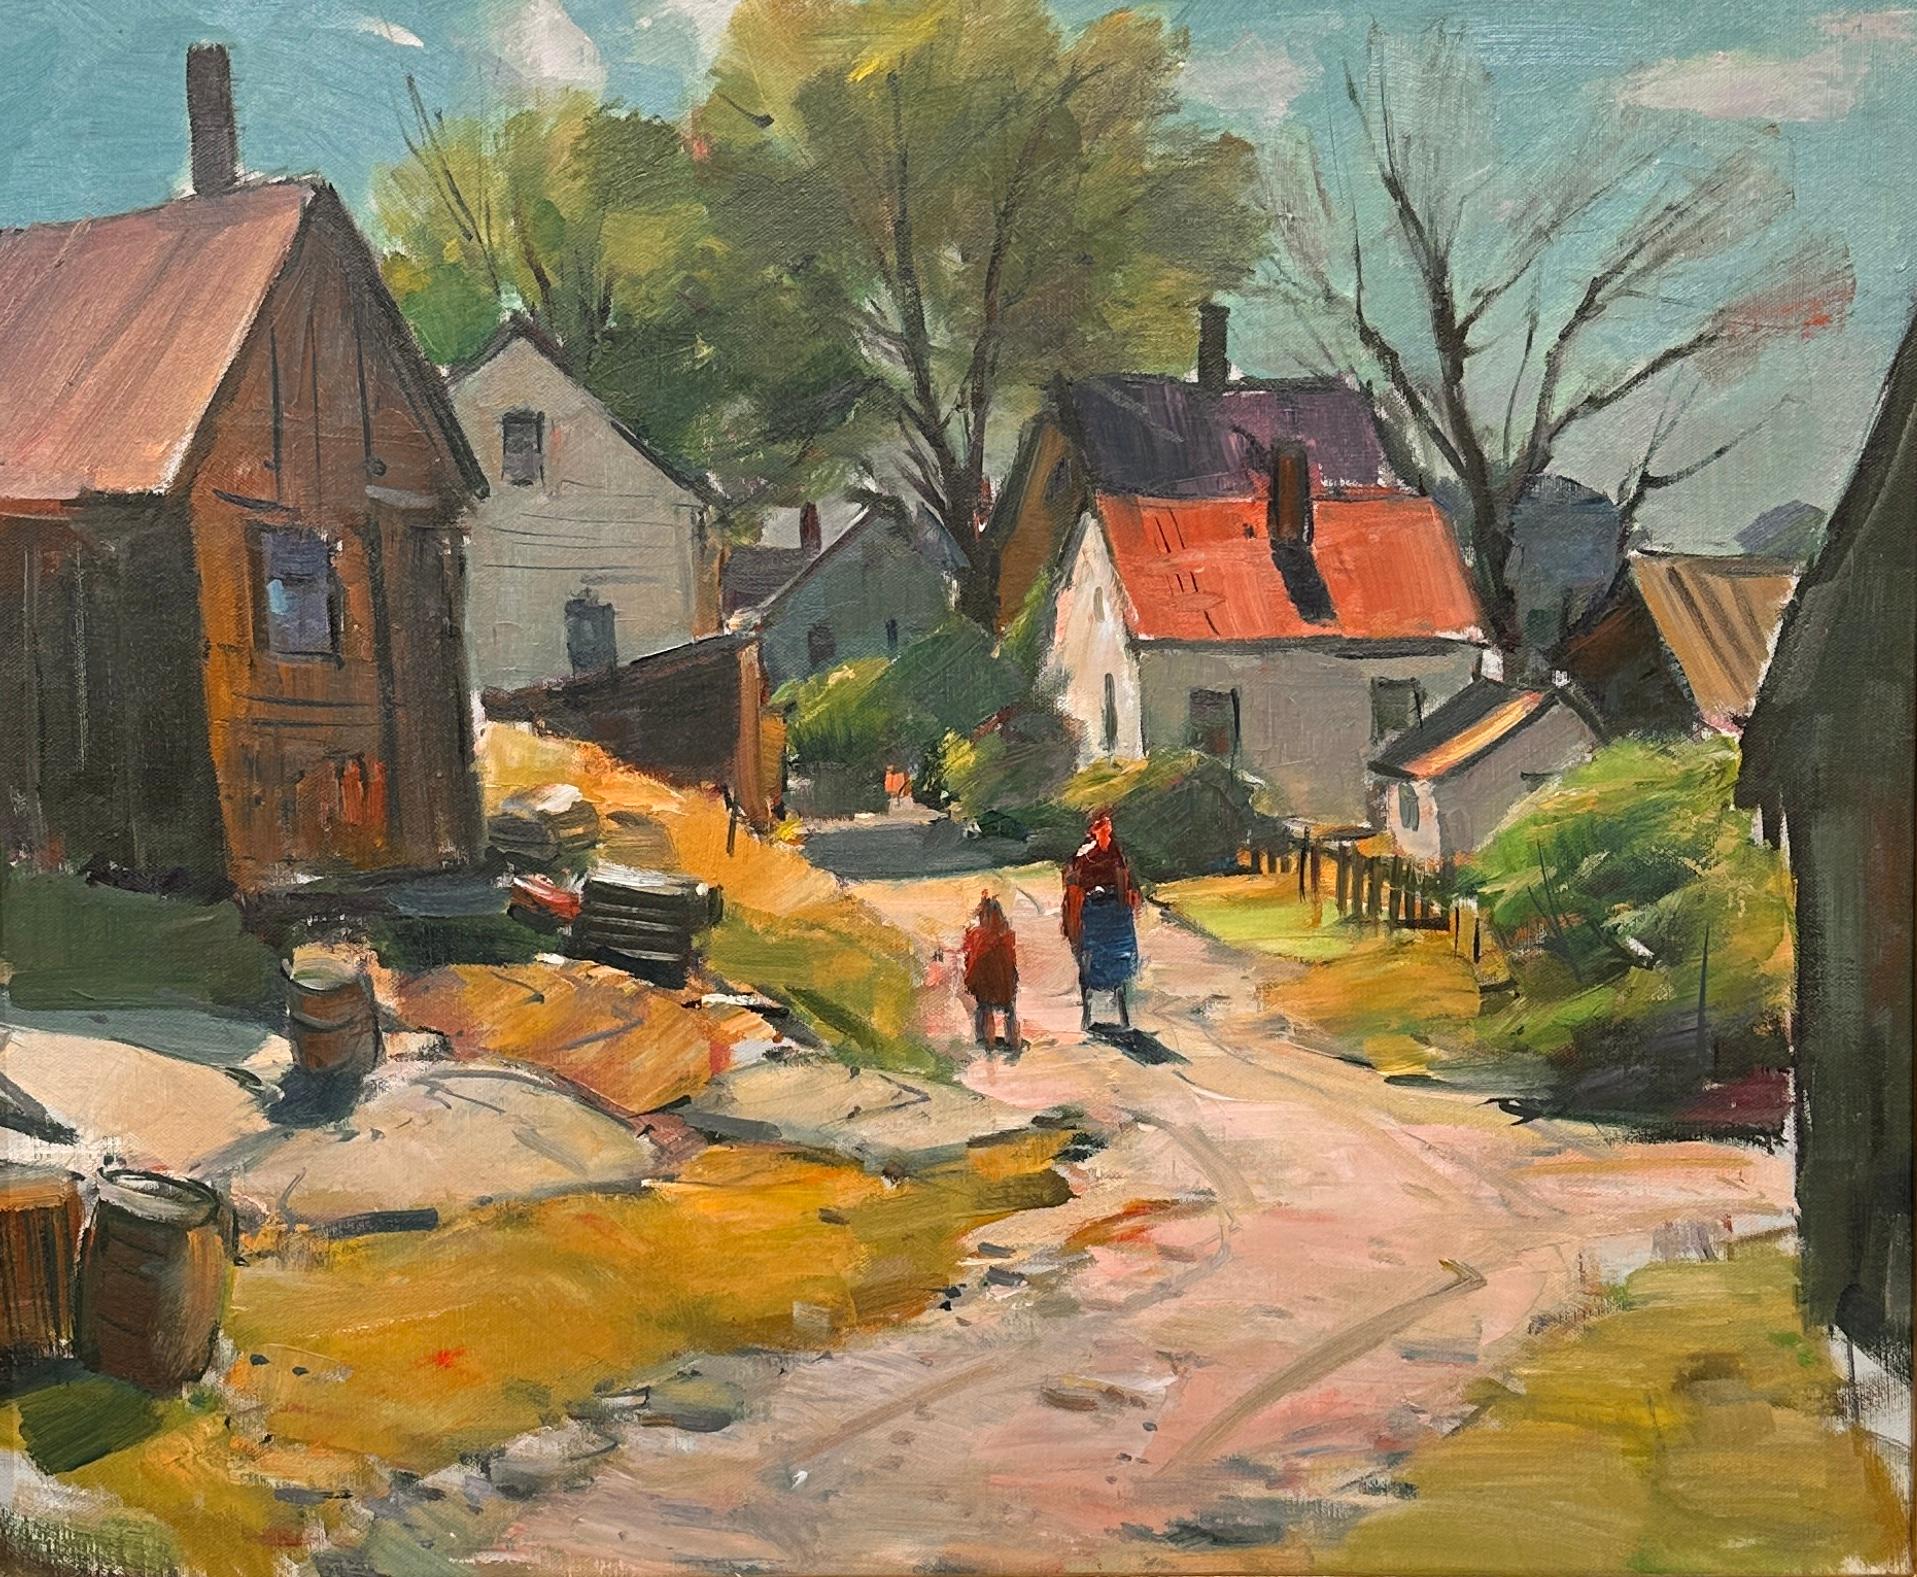 Landscape Painting Carl Peters - Paysage, personnages, artiste de Cape Ann, Rochester, NY